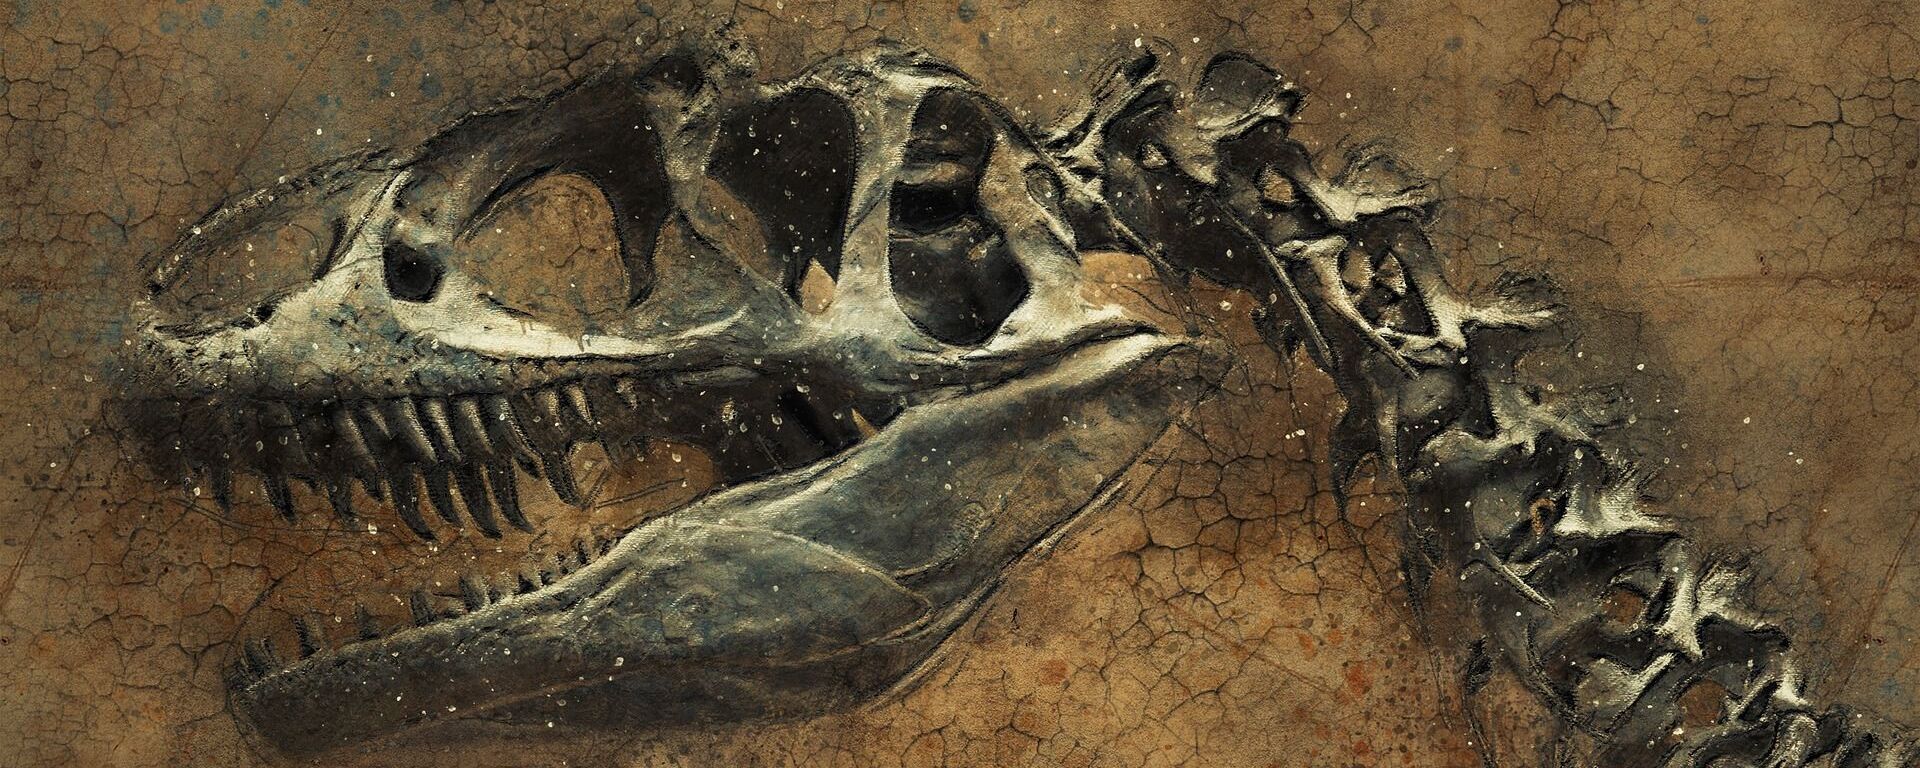 El esqueleto de un dinosaurio - Sputnik Mundo, 1920, 27.10.2020